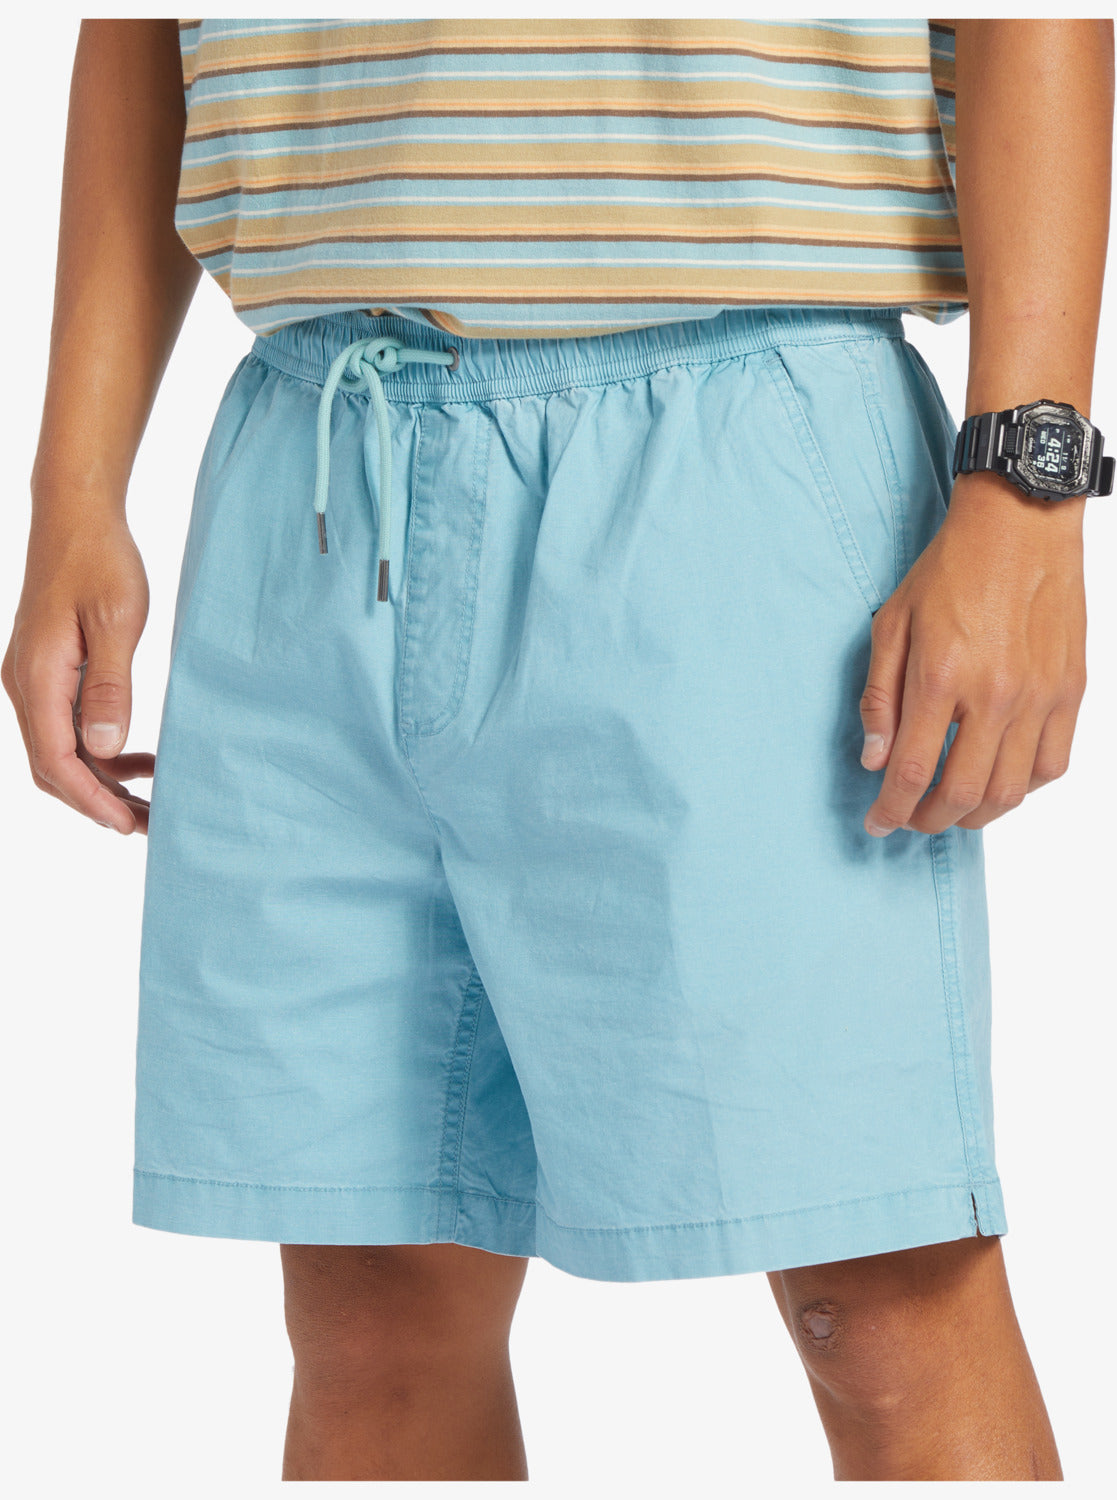 Taxer Elastic Waist Shorts - Cameo Blue